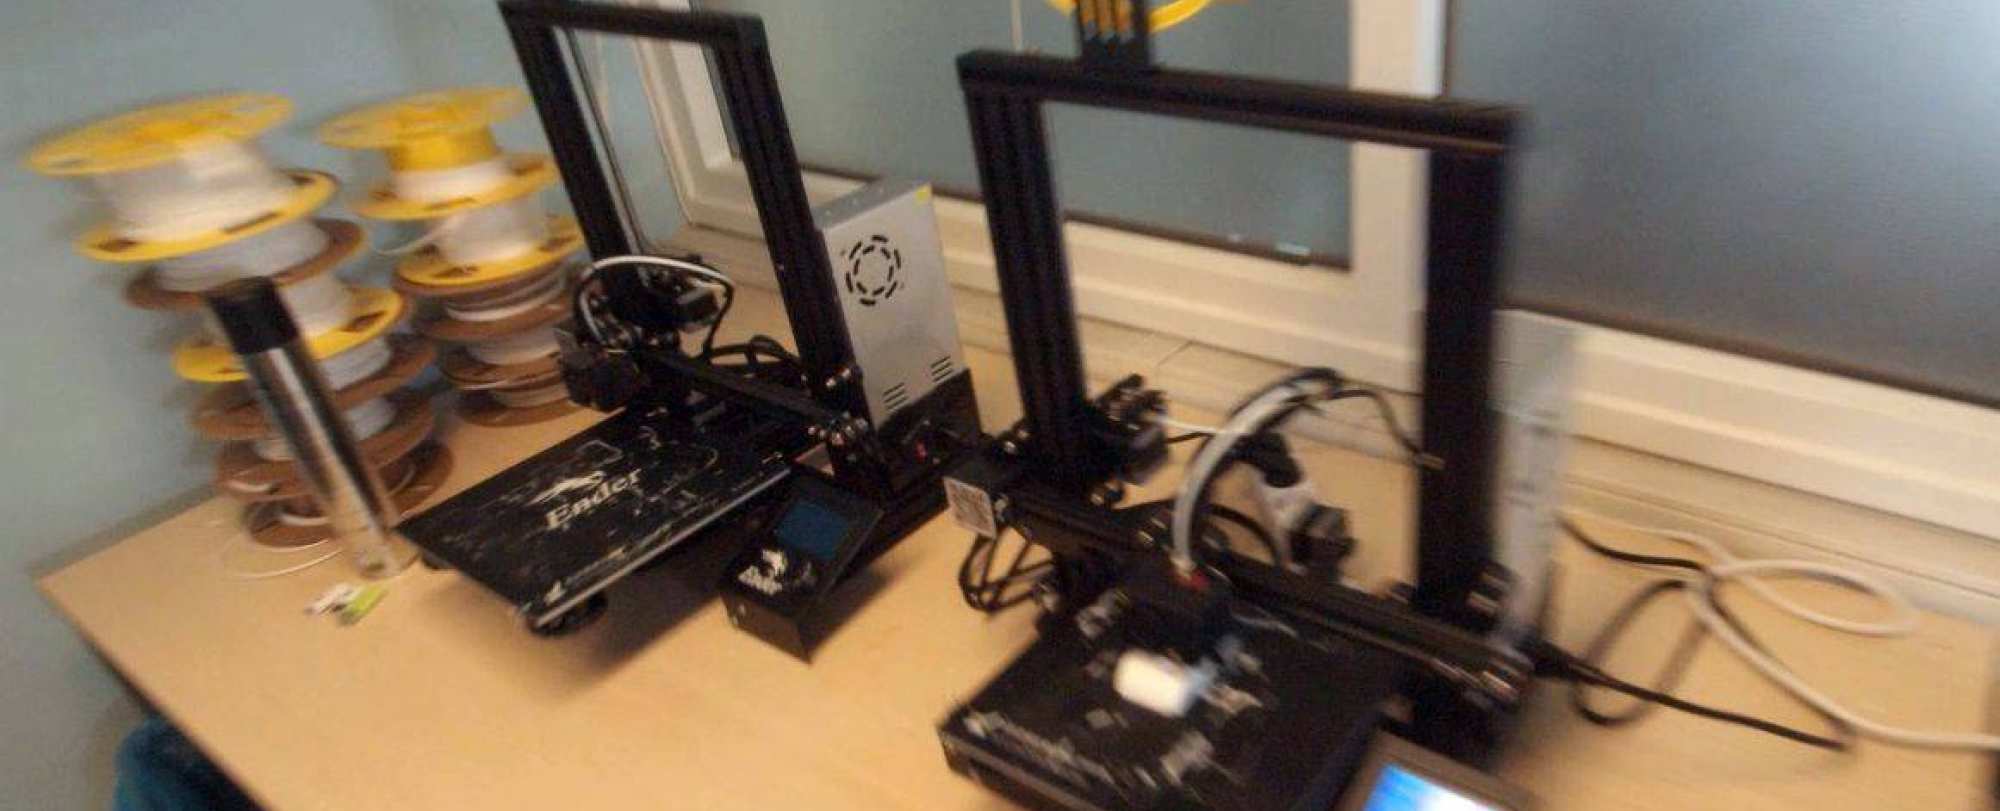 3D printers Ender